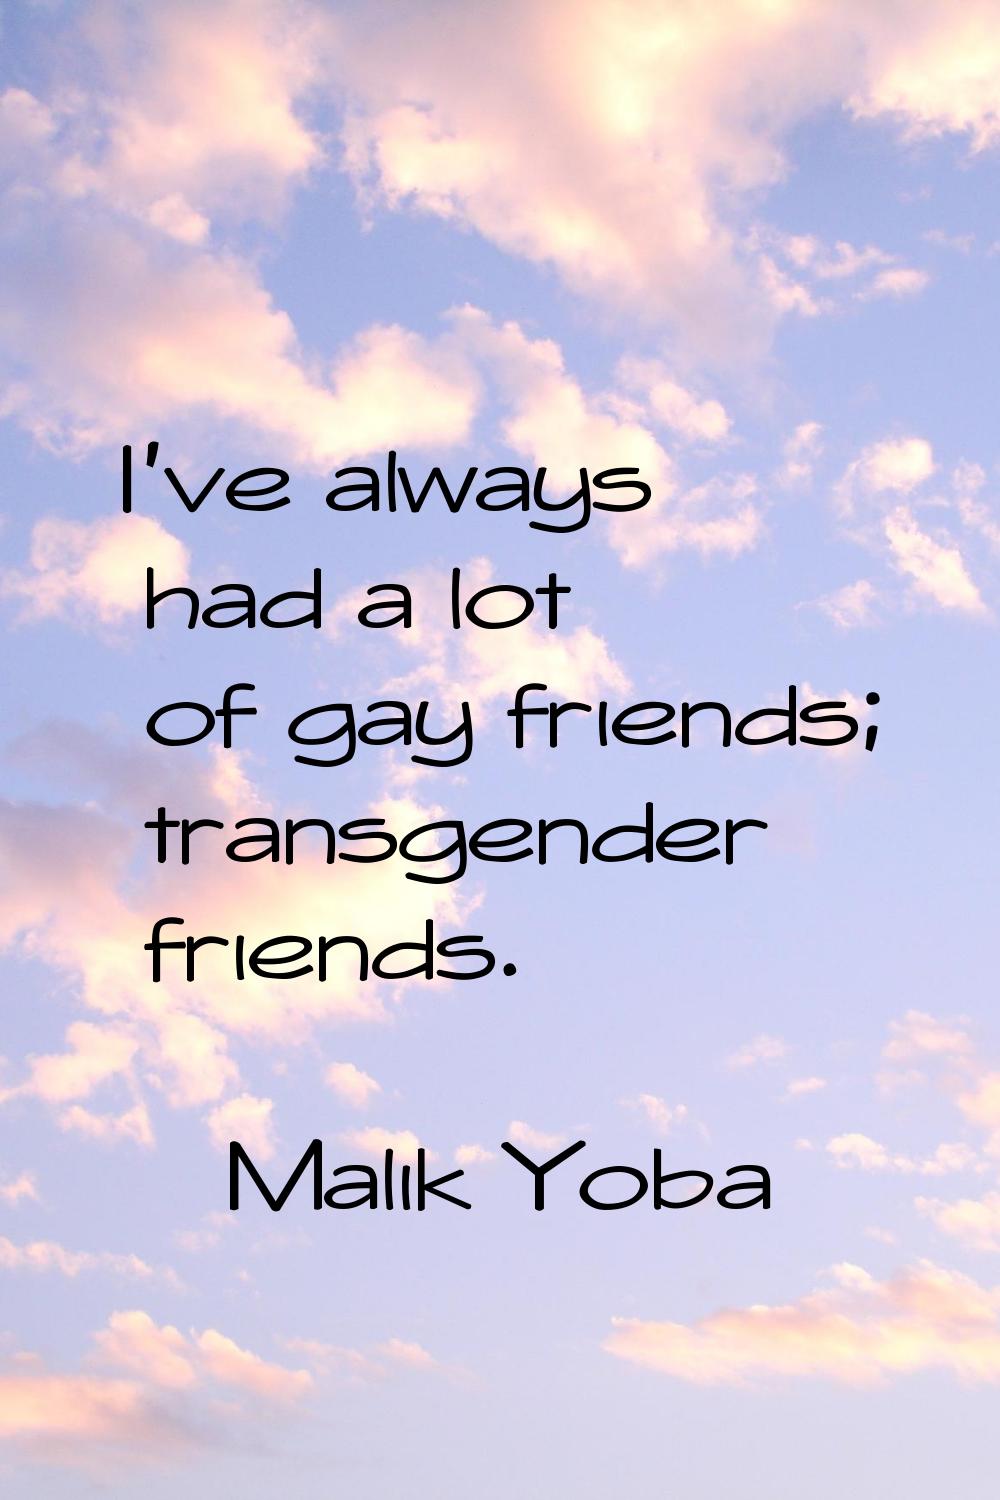 I've always had a lot of gay friends; transgender friends.